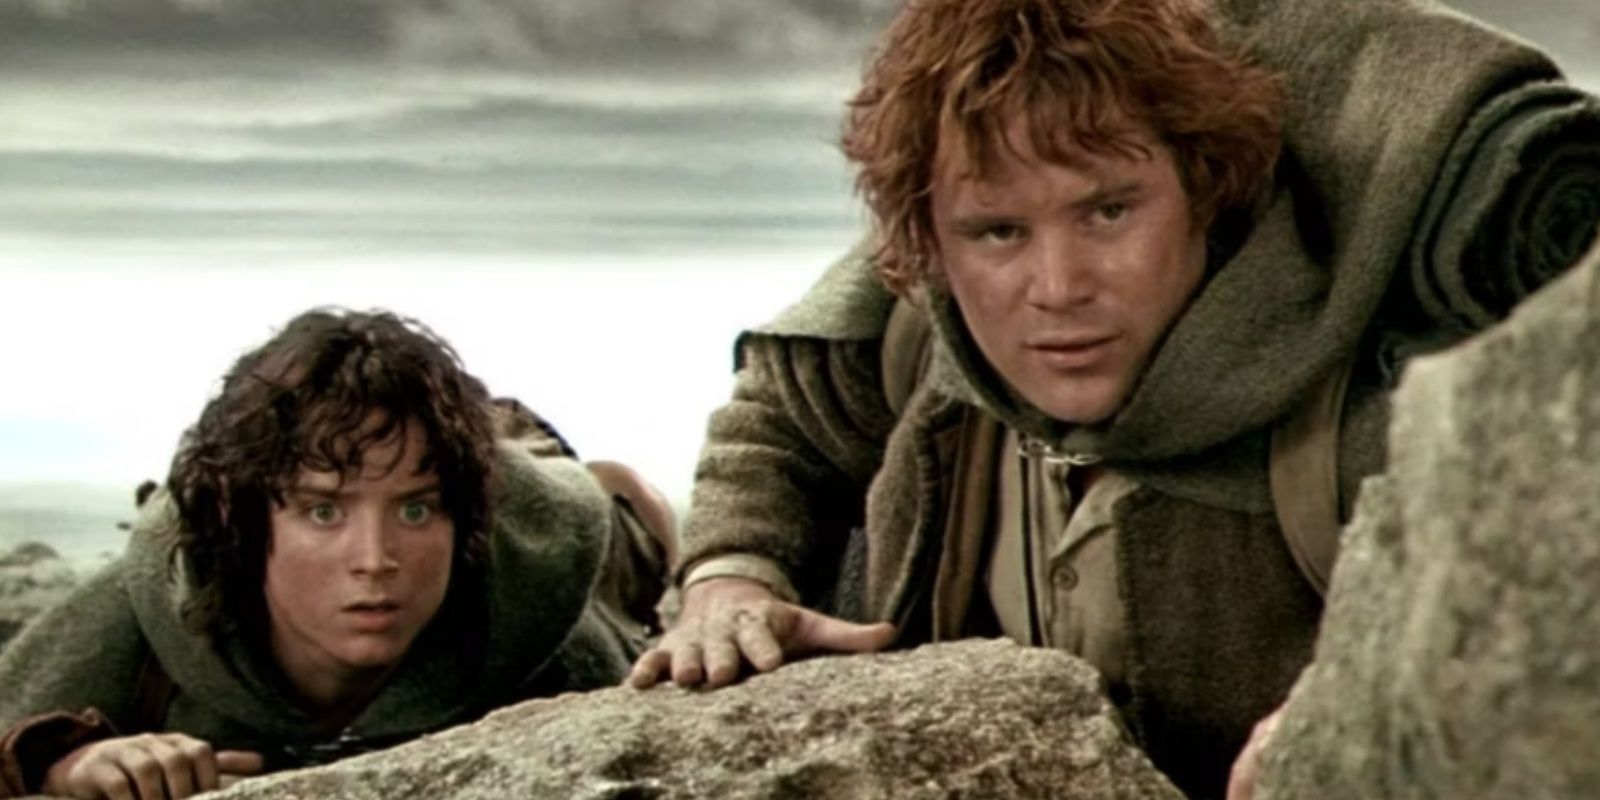 Elijah Woods as Frodo Baggins. Sean Astin as Samwise Gamgee